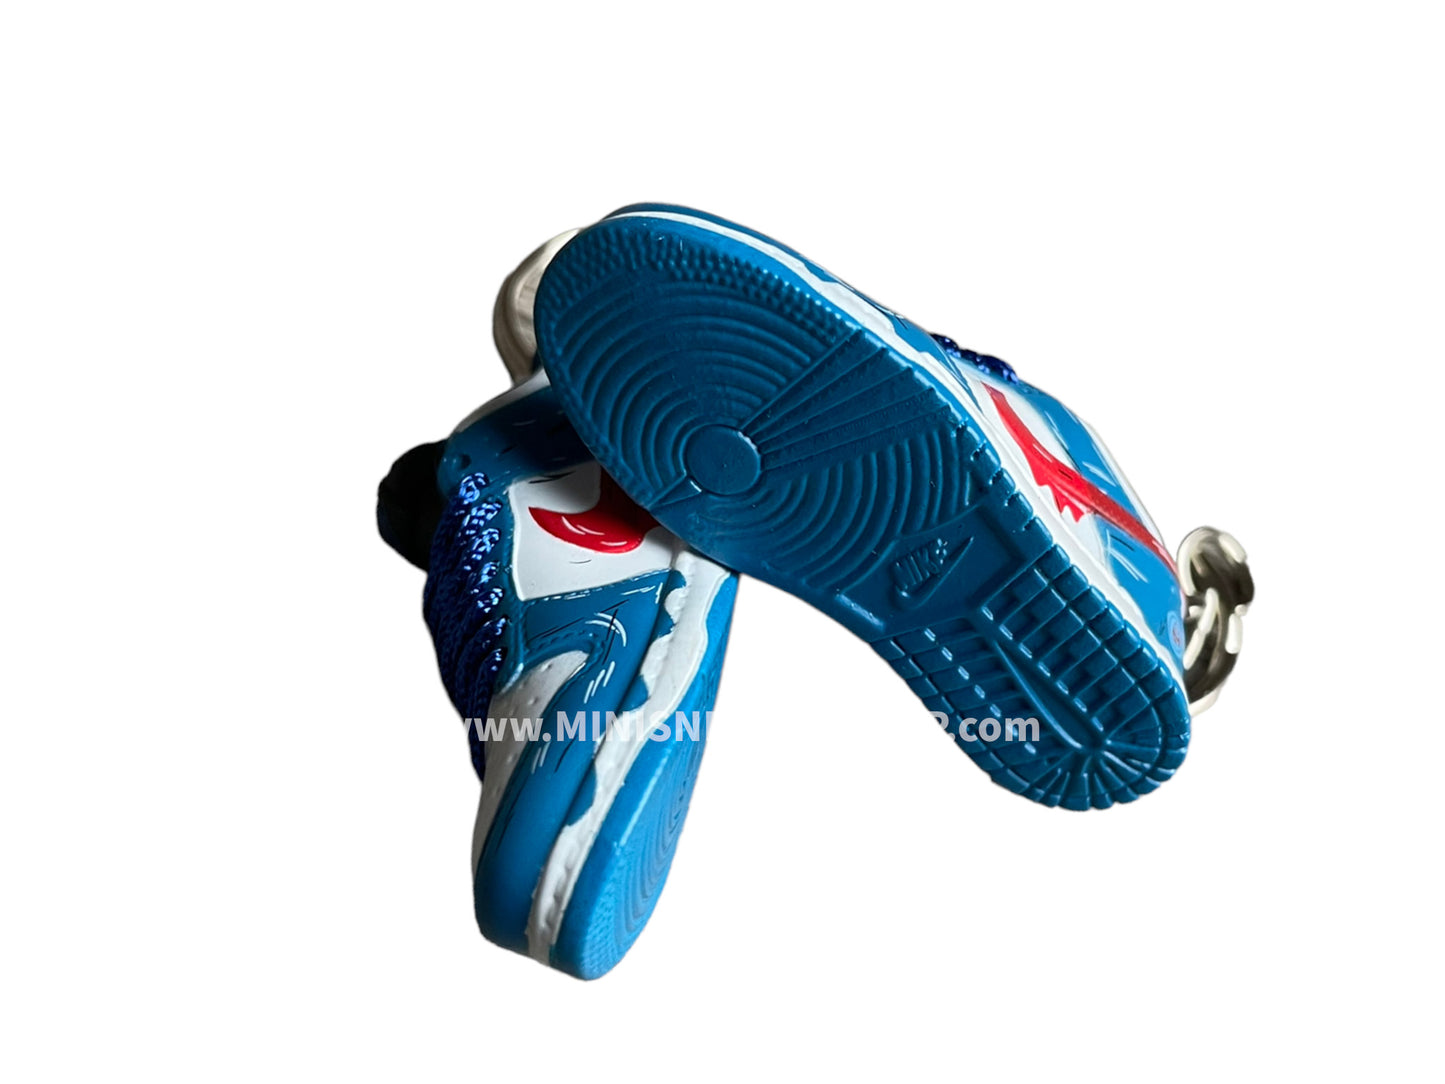 Mini sneaker keychain 3D Dunk - Kenjo concept blue white